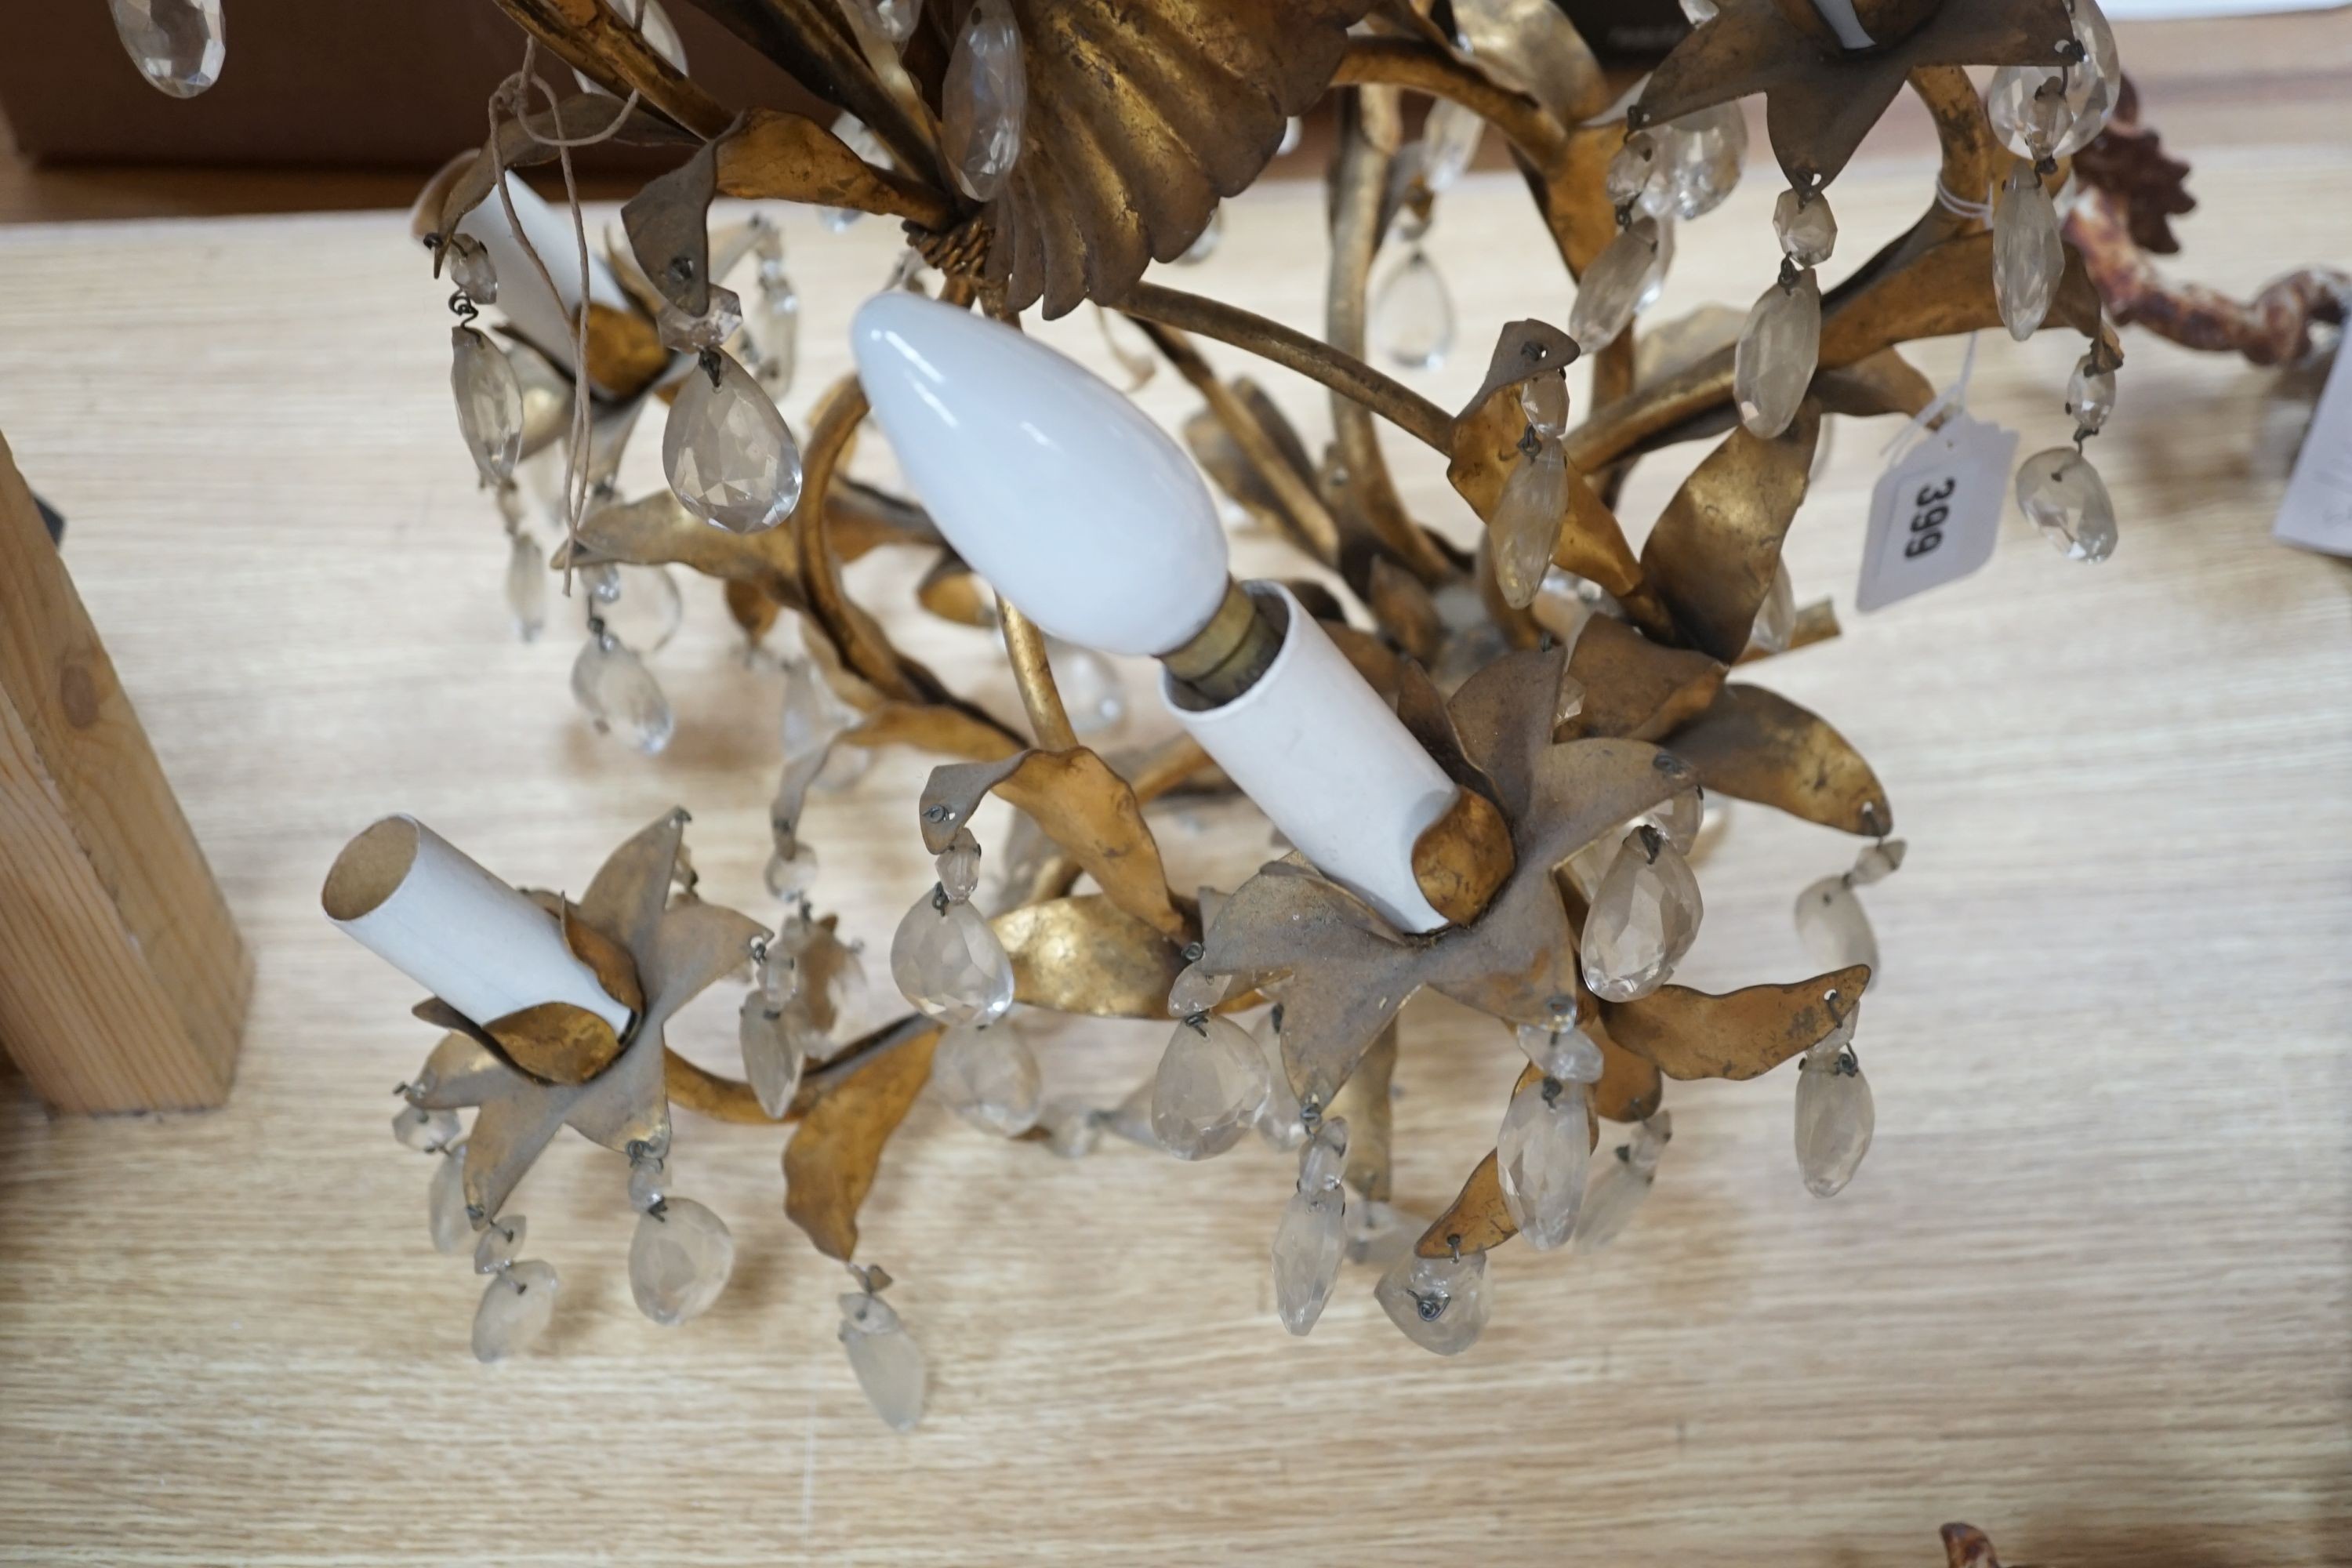 A gilt metal lustre drop chandelier